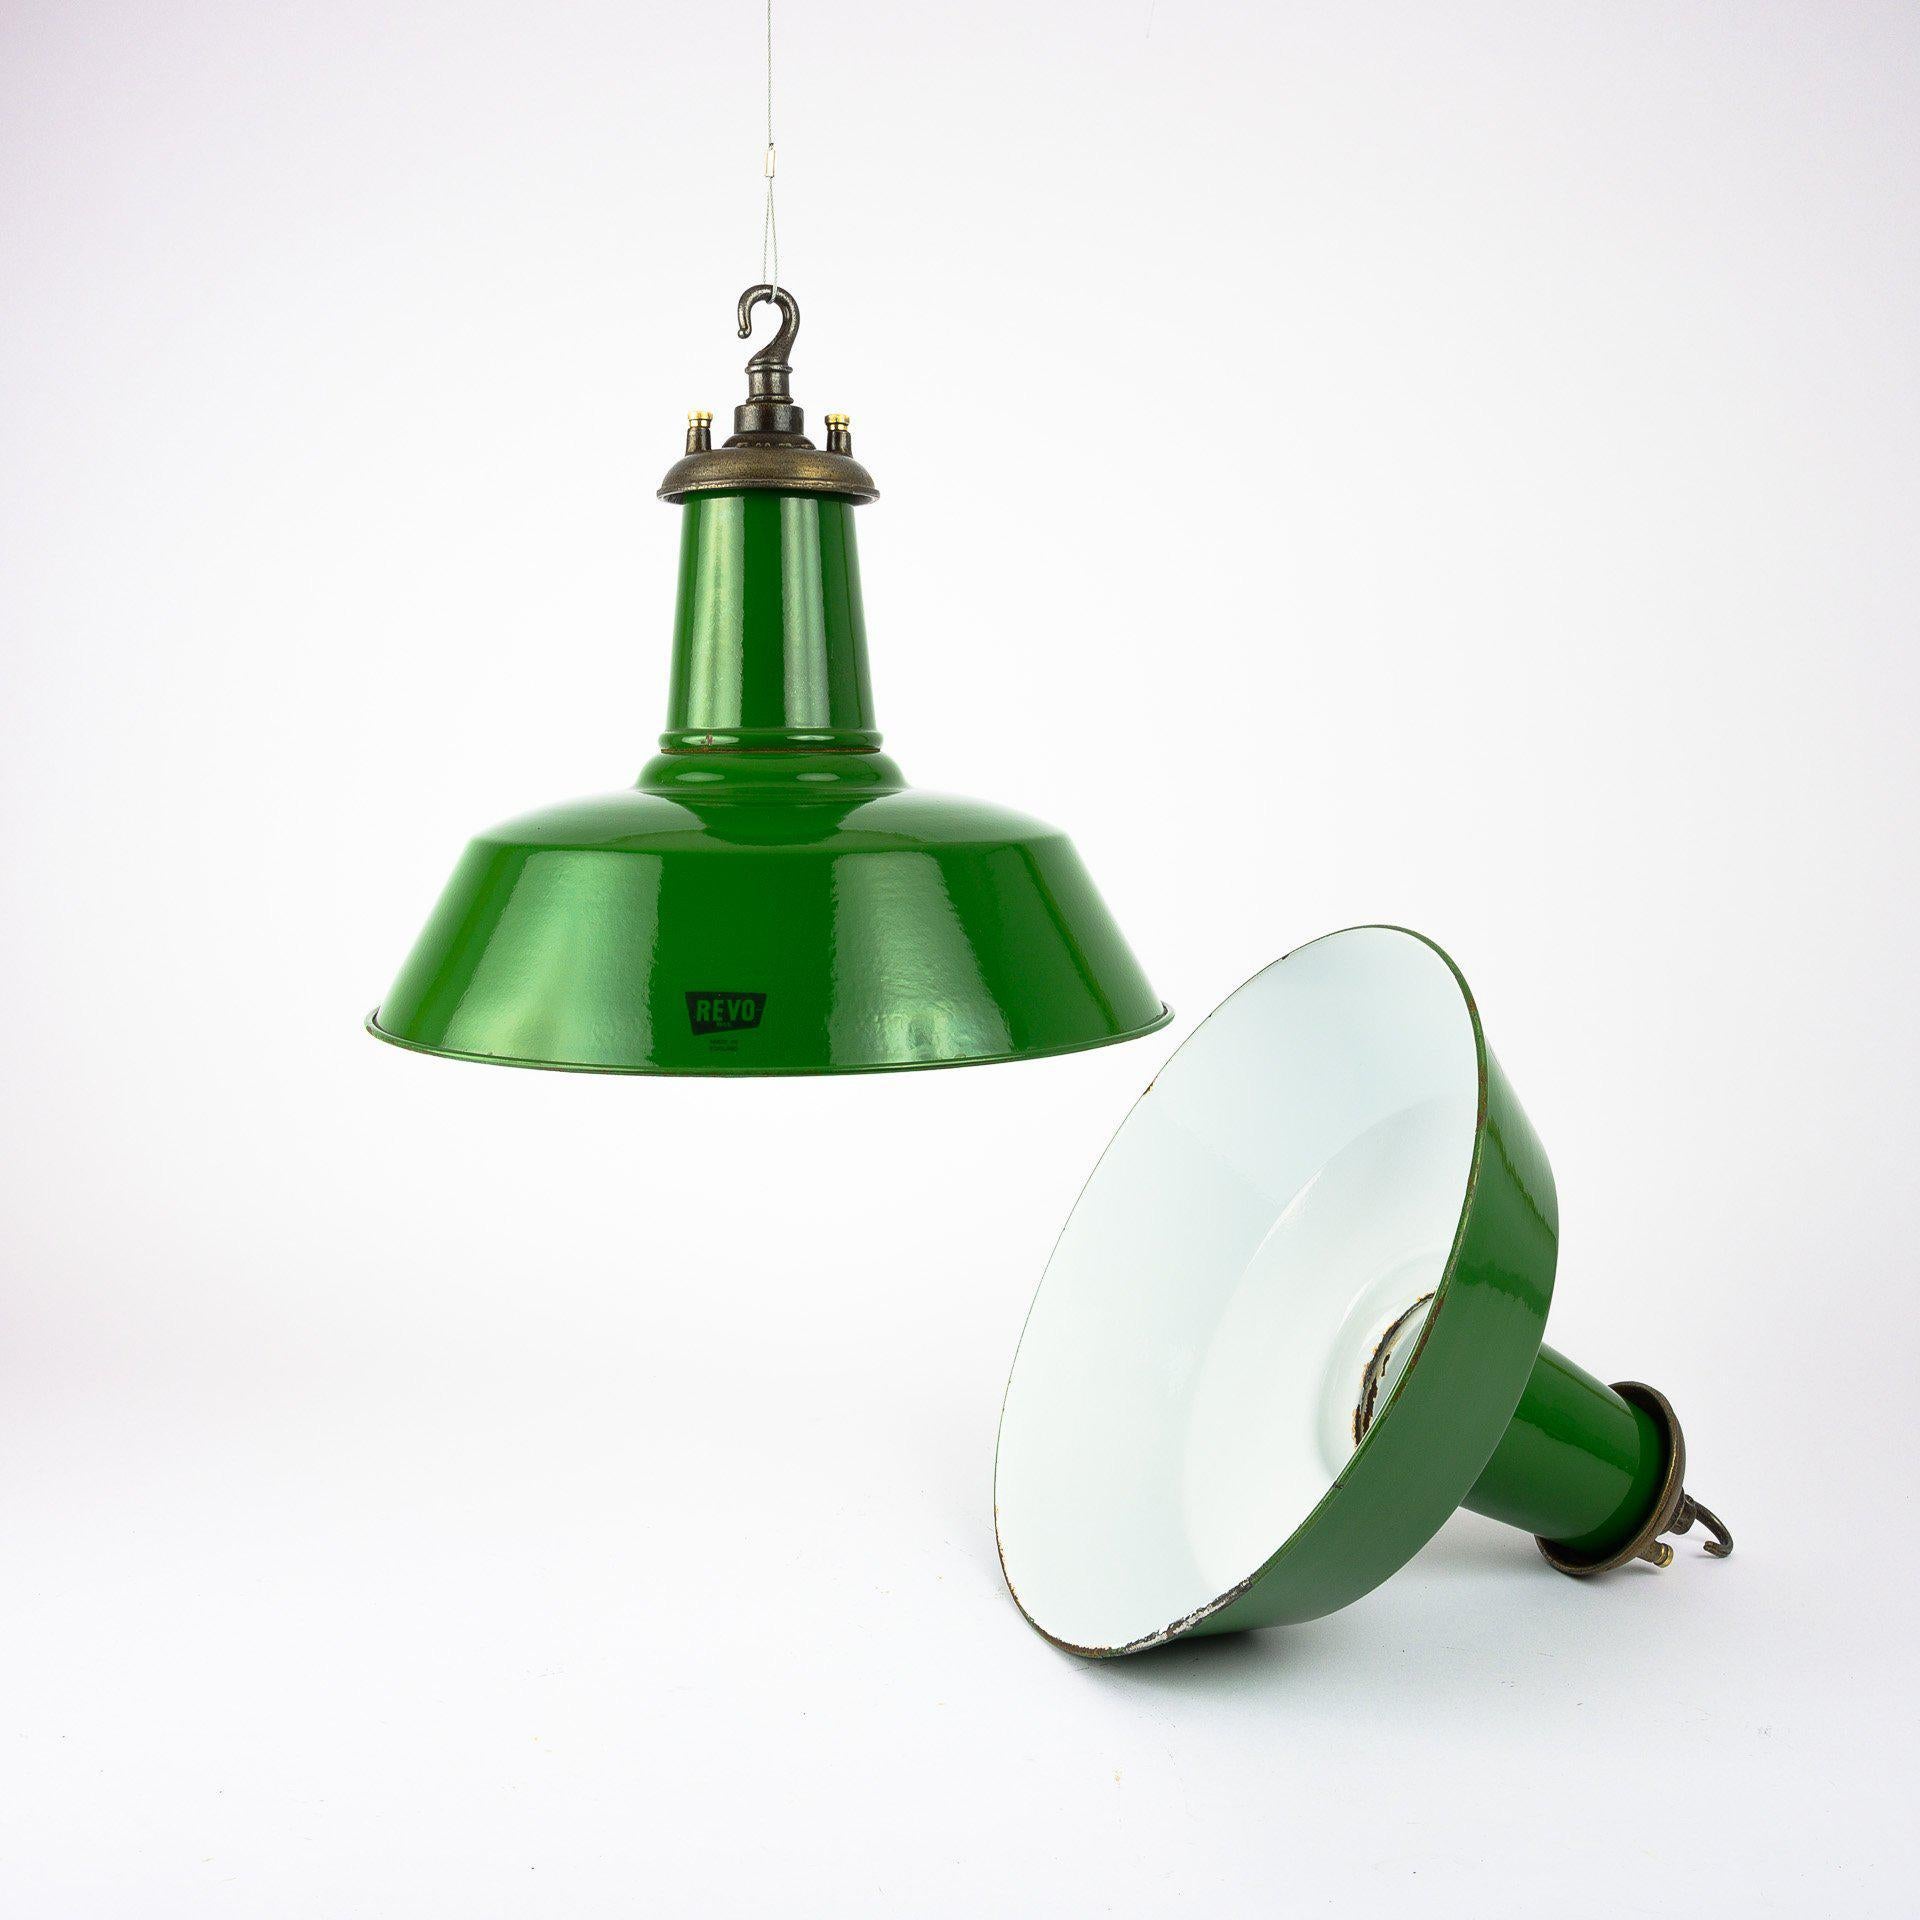 Mid-20th Century Original Industrial Green Enamel Factory Pendant Lights by Revo Tipton For Sale